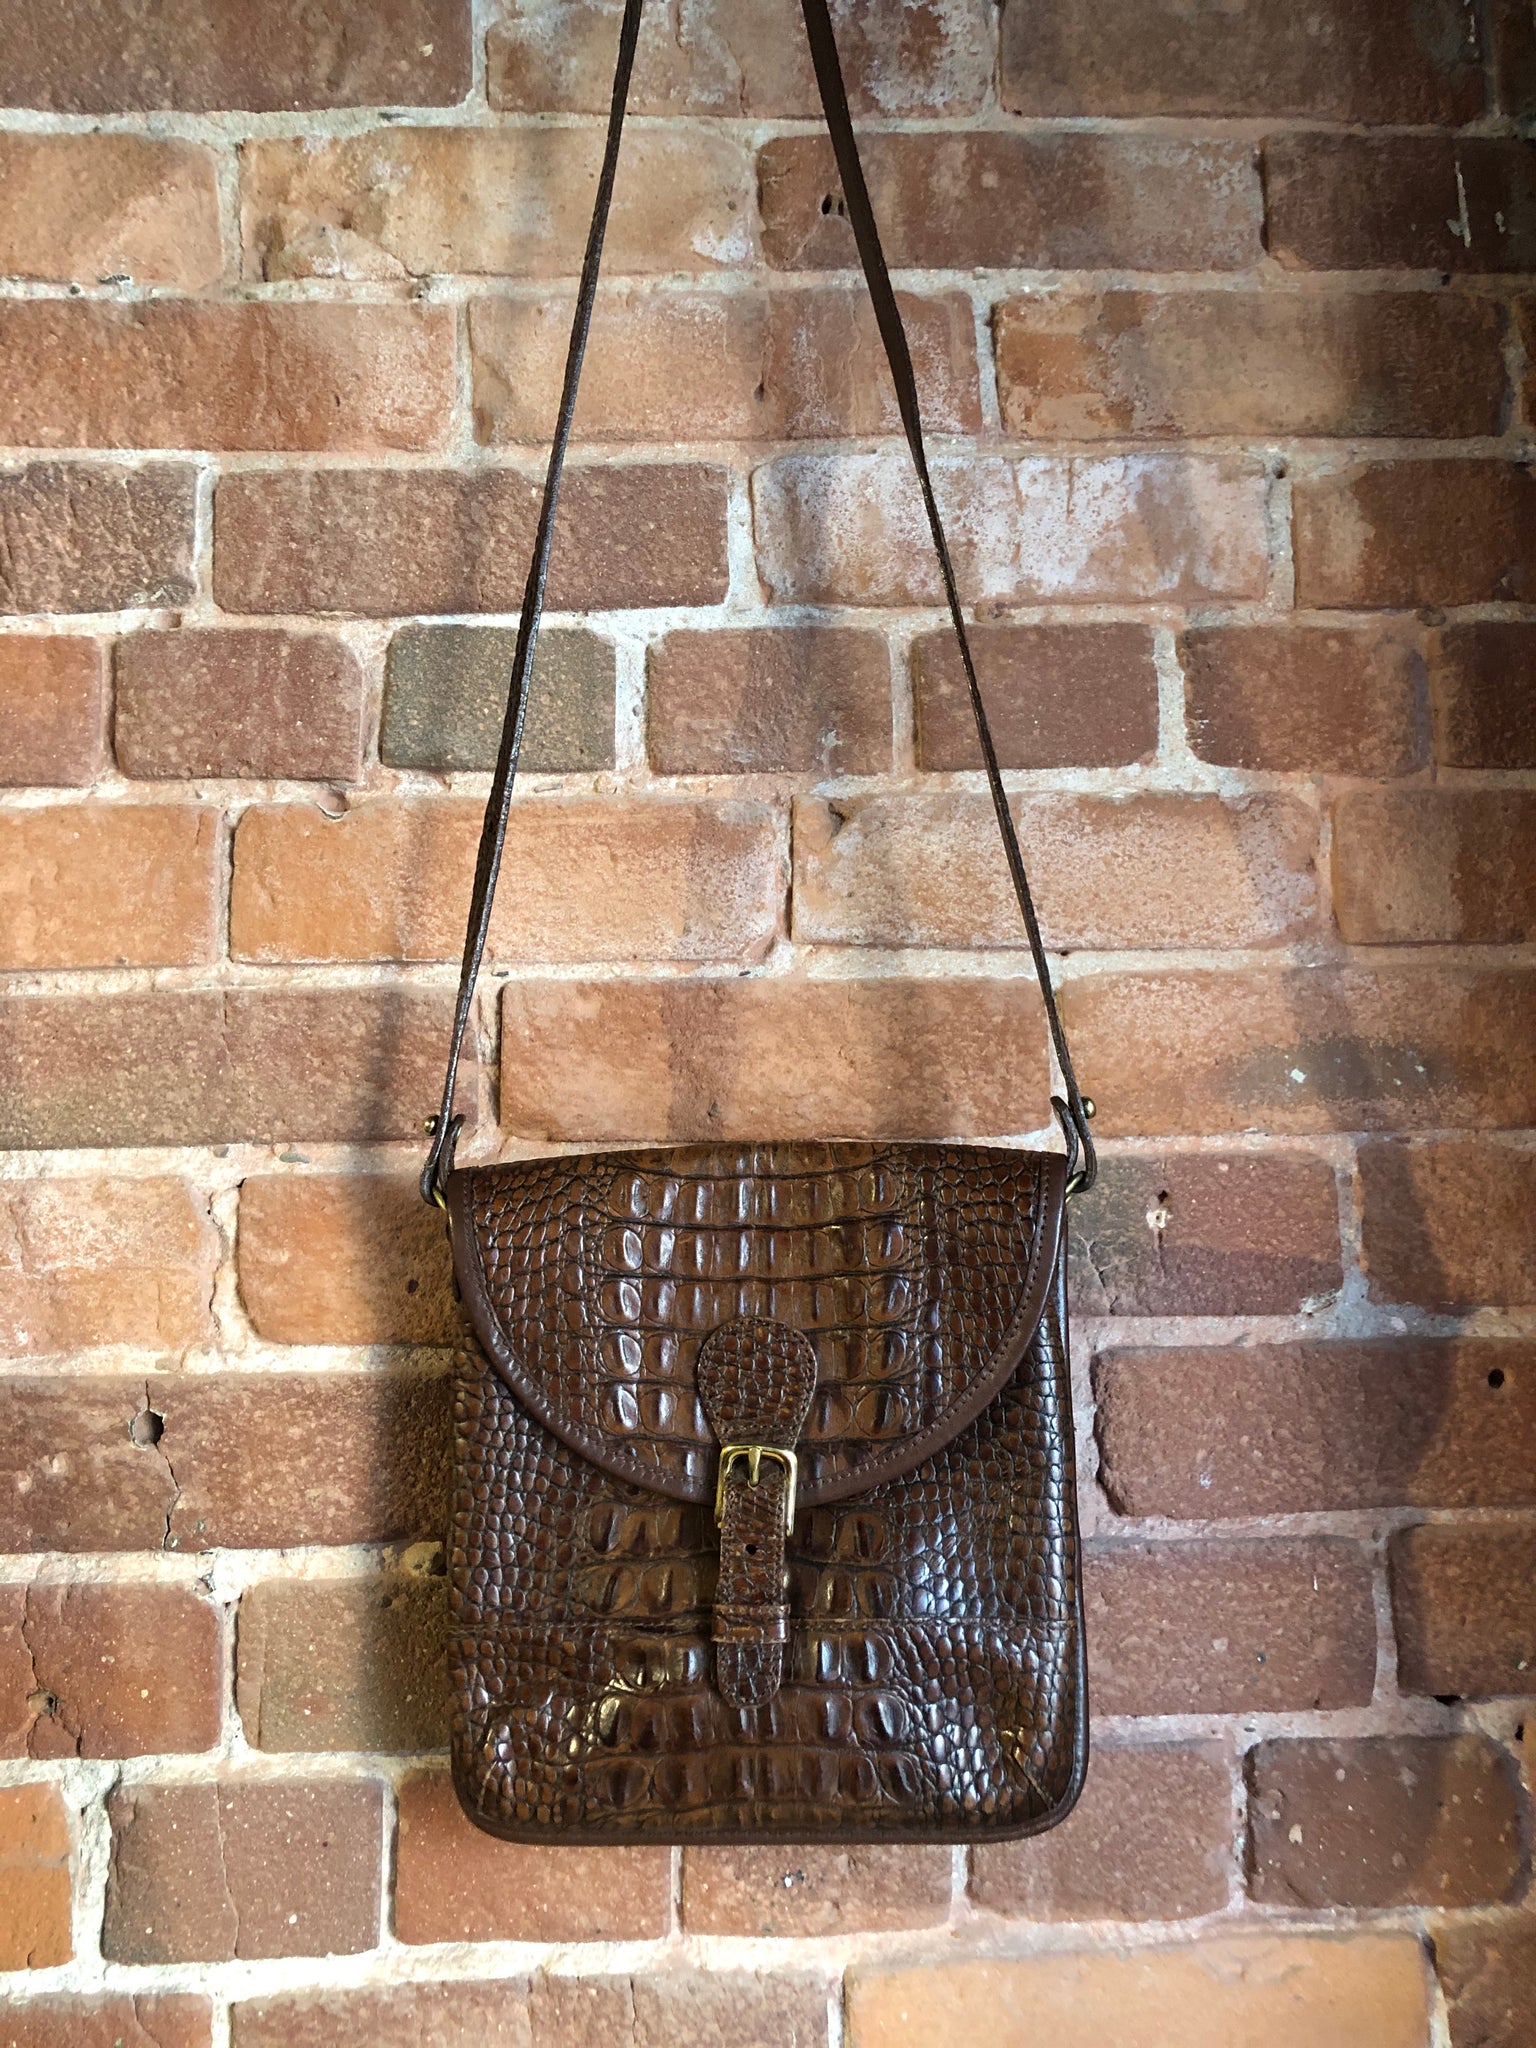 Brahmin Handbags  Designer Leather Handbags Outlet USA Store Online